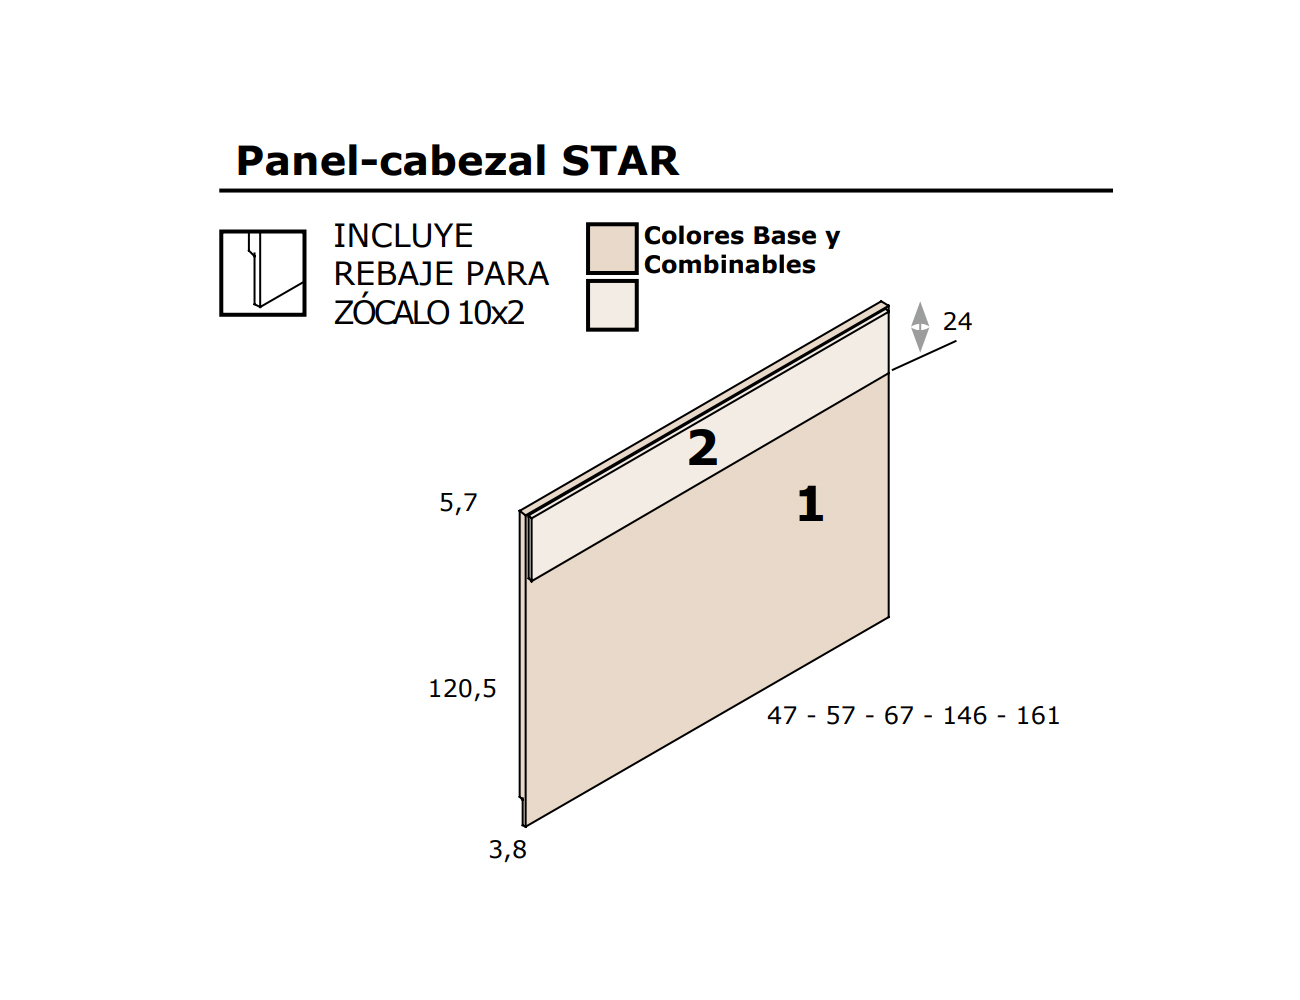 Panel cabezal star